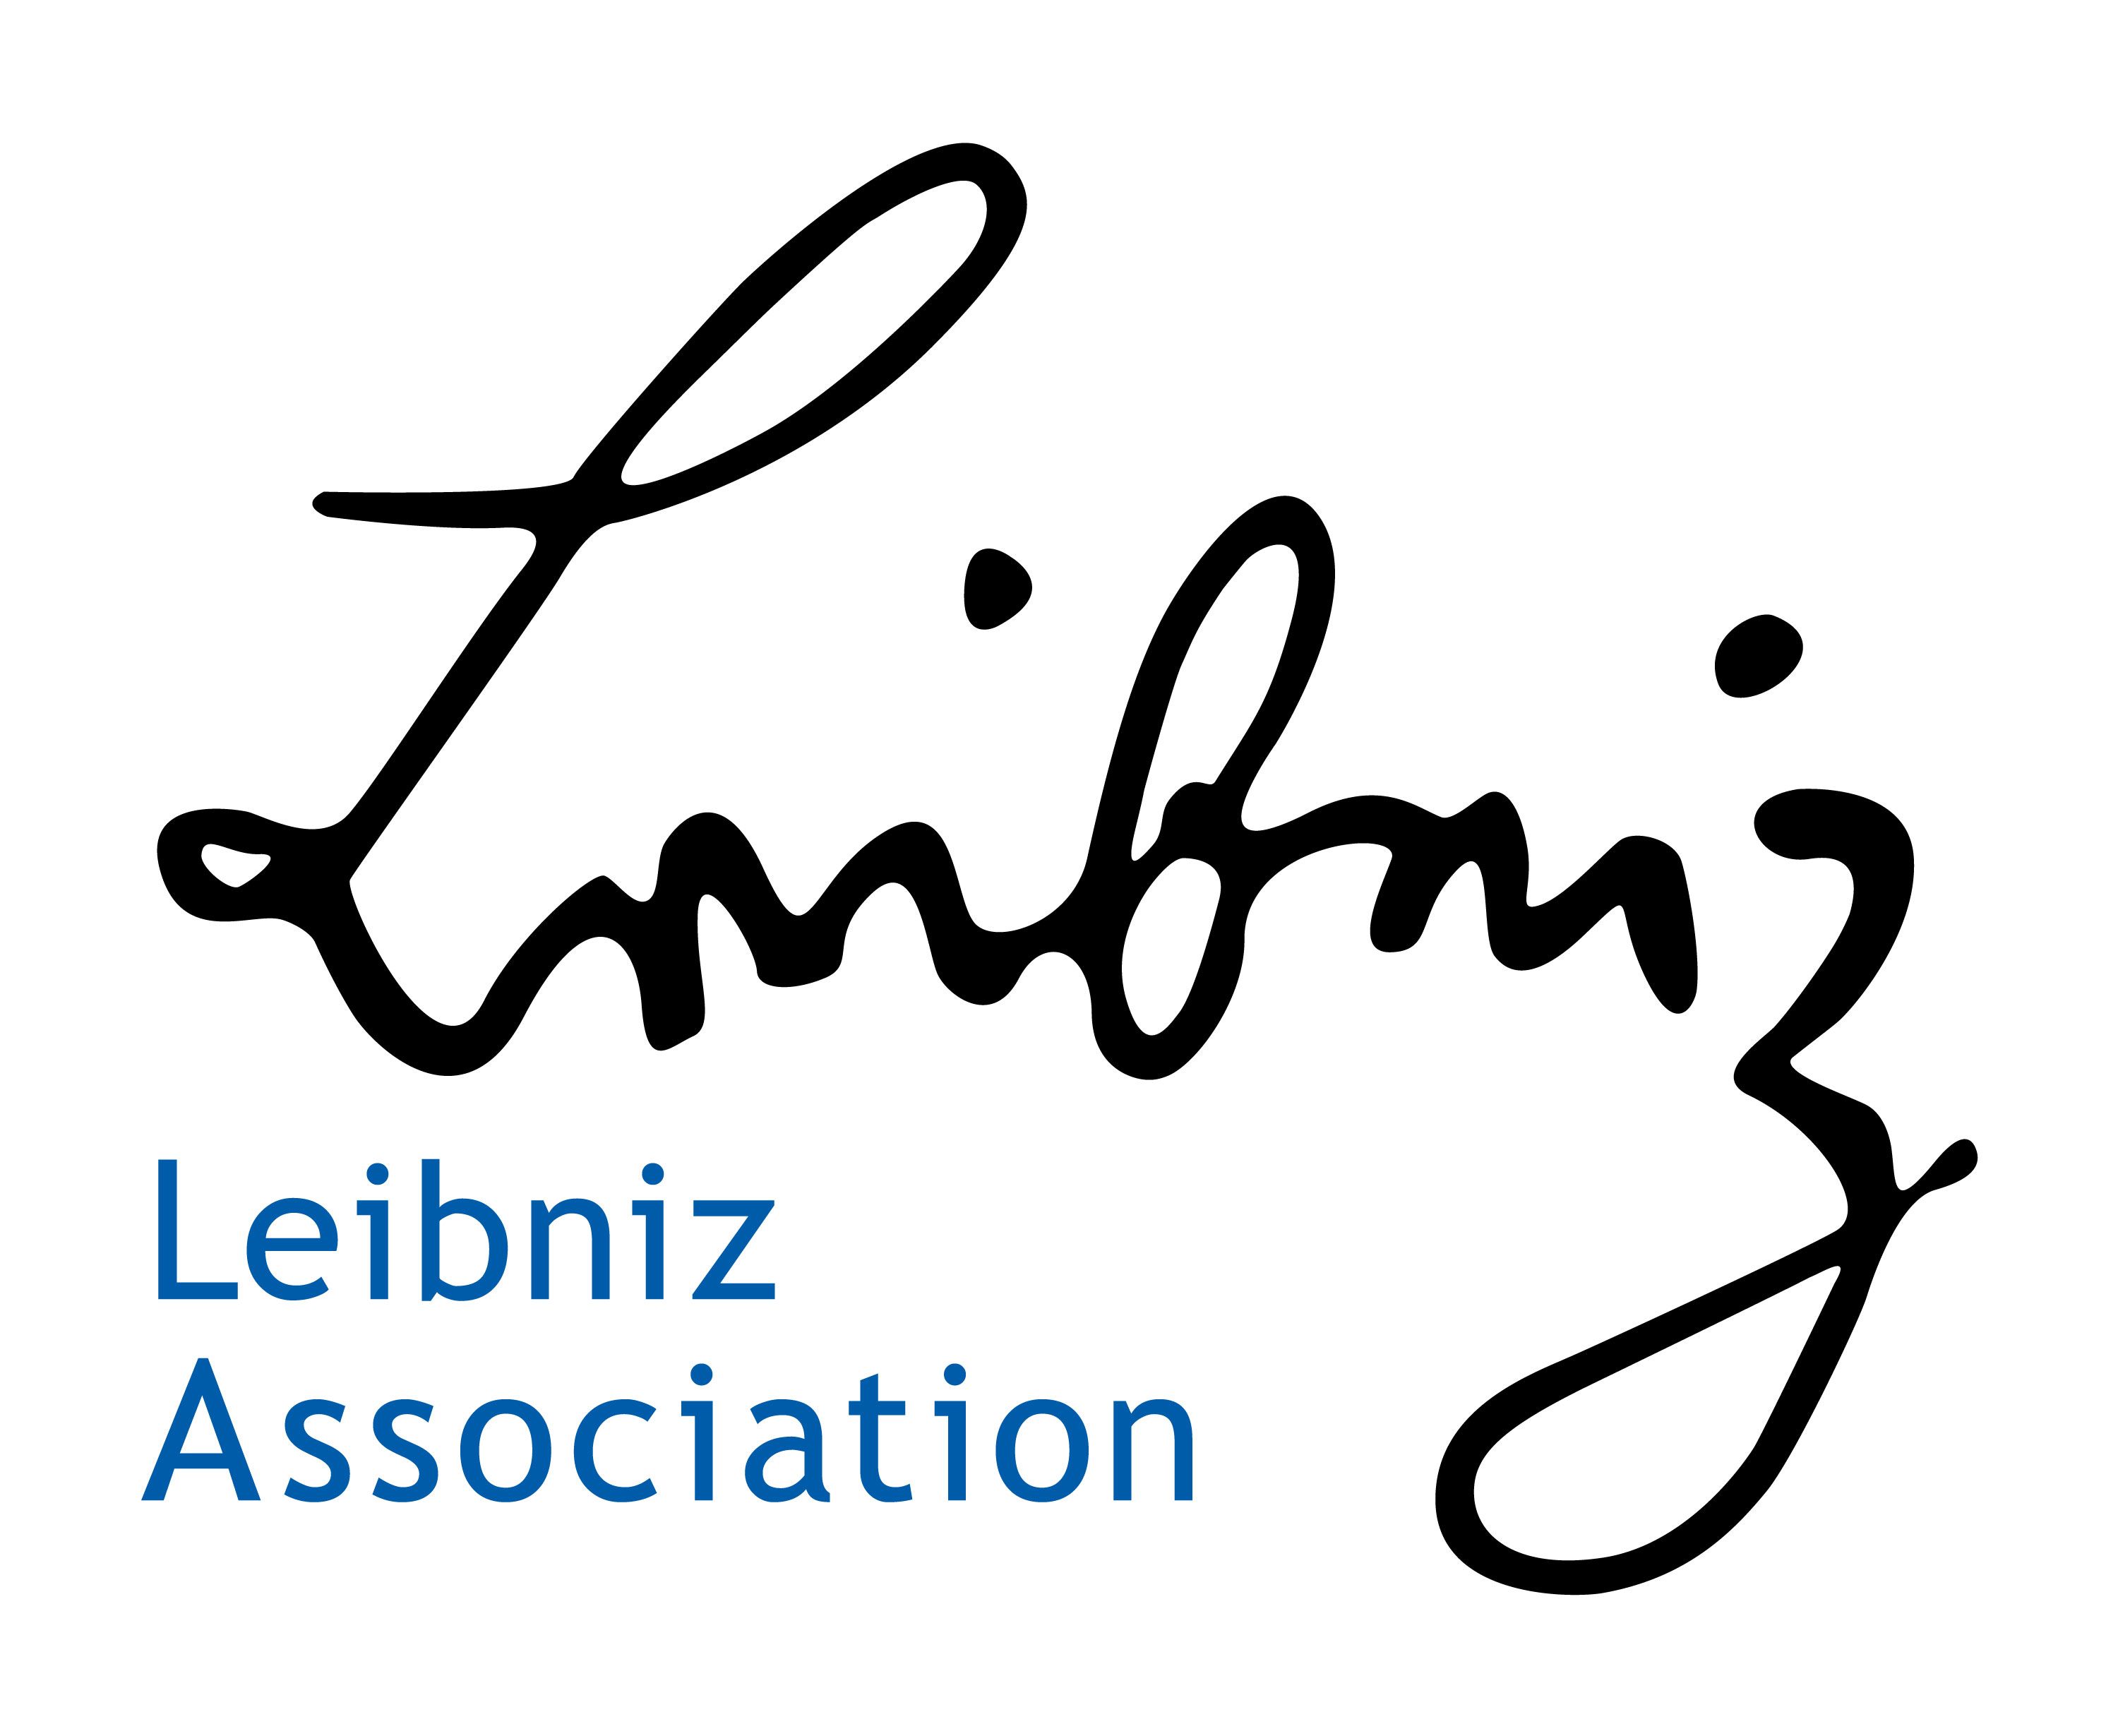 Leibniz ScienceCampus "Empirical Linguistics and Computational Language Learning" (2015 – 2020)